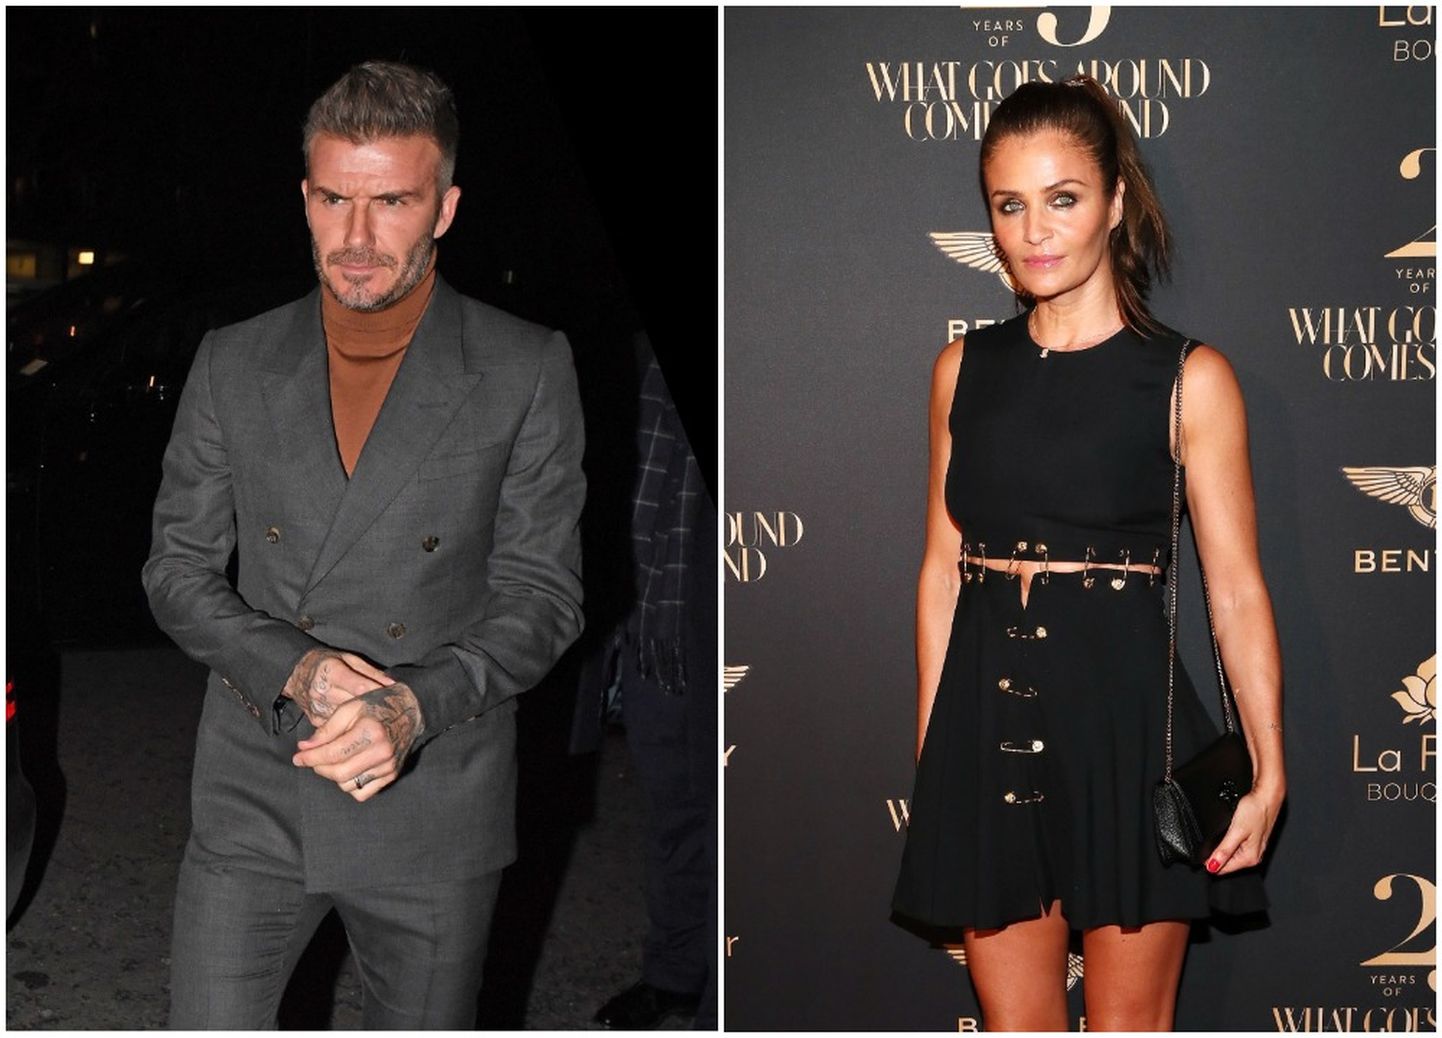 Vutitäht David Beckham pani Miamis pidu koos supermodell Helena Christenseniga.